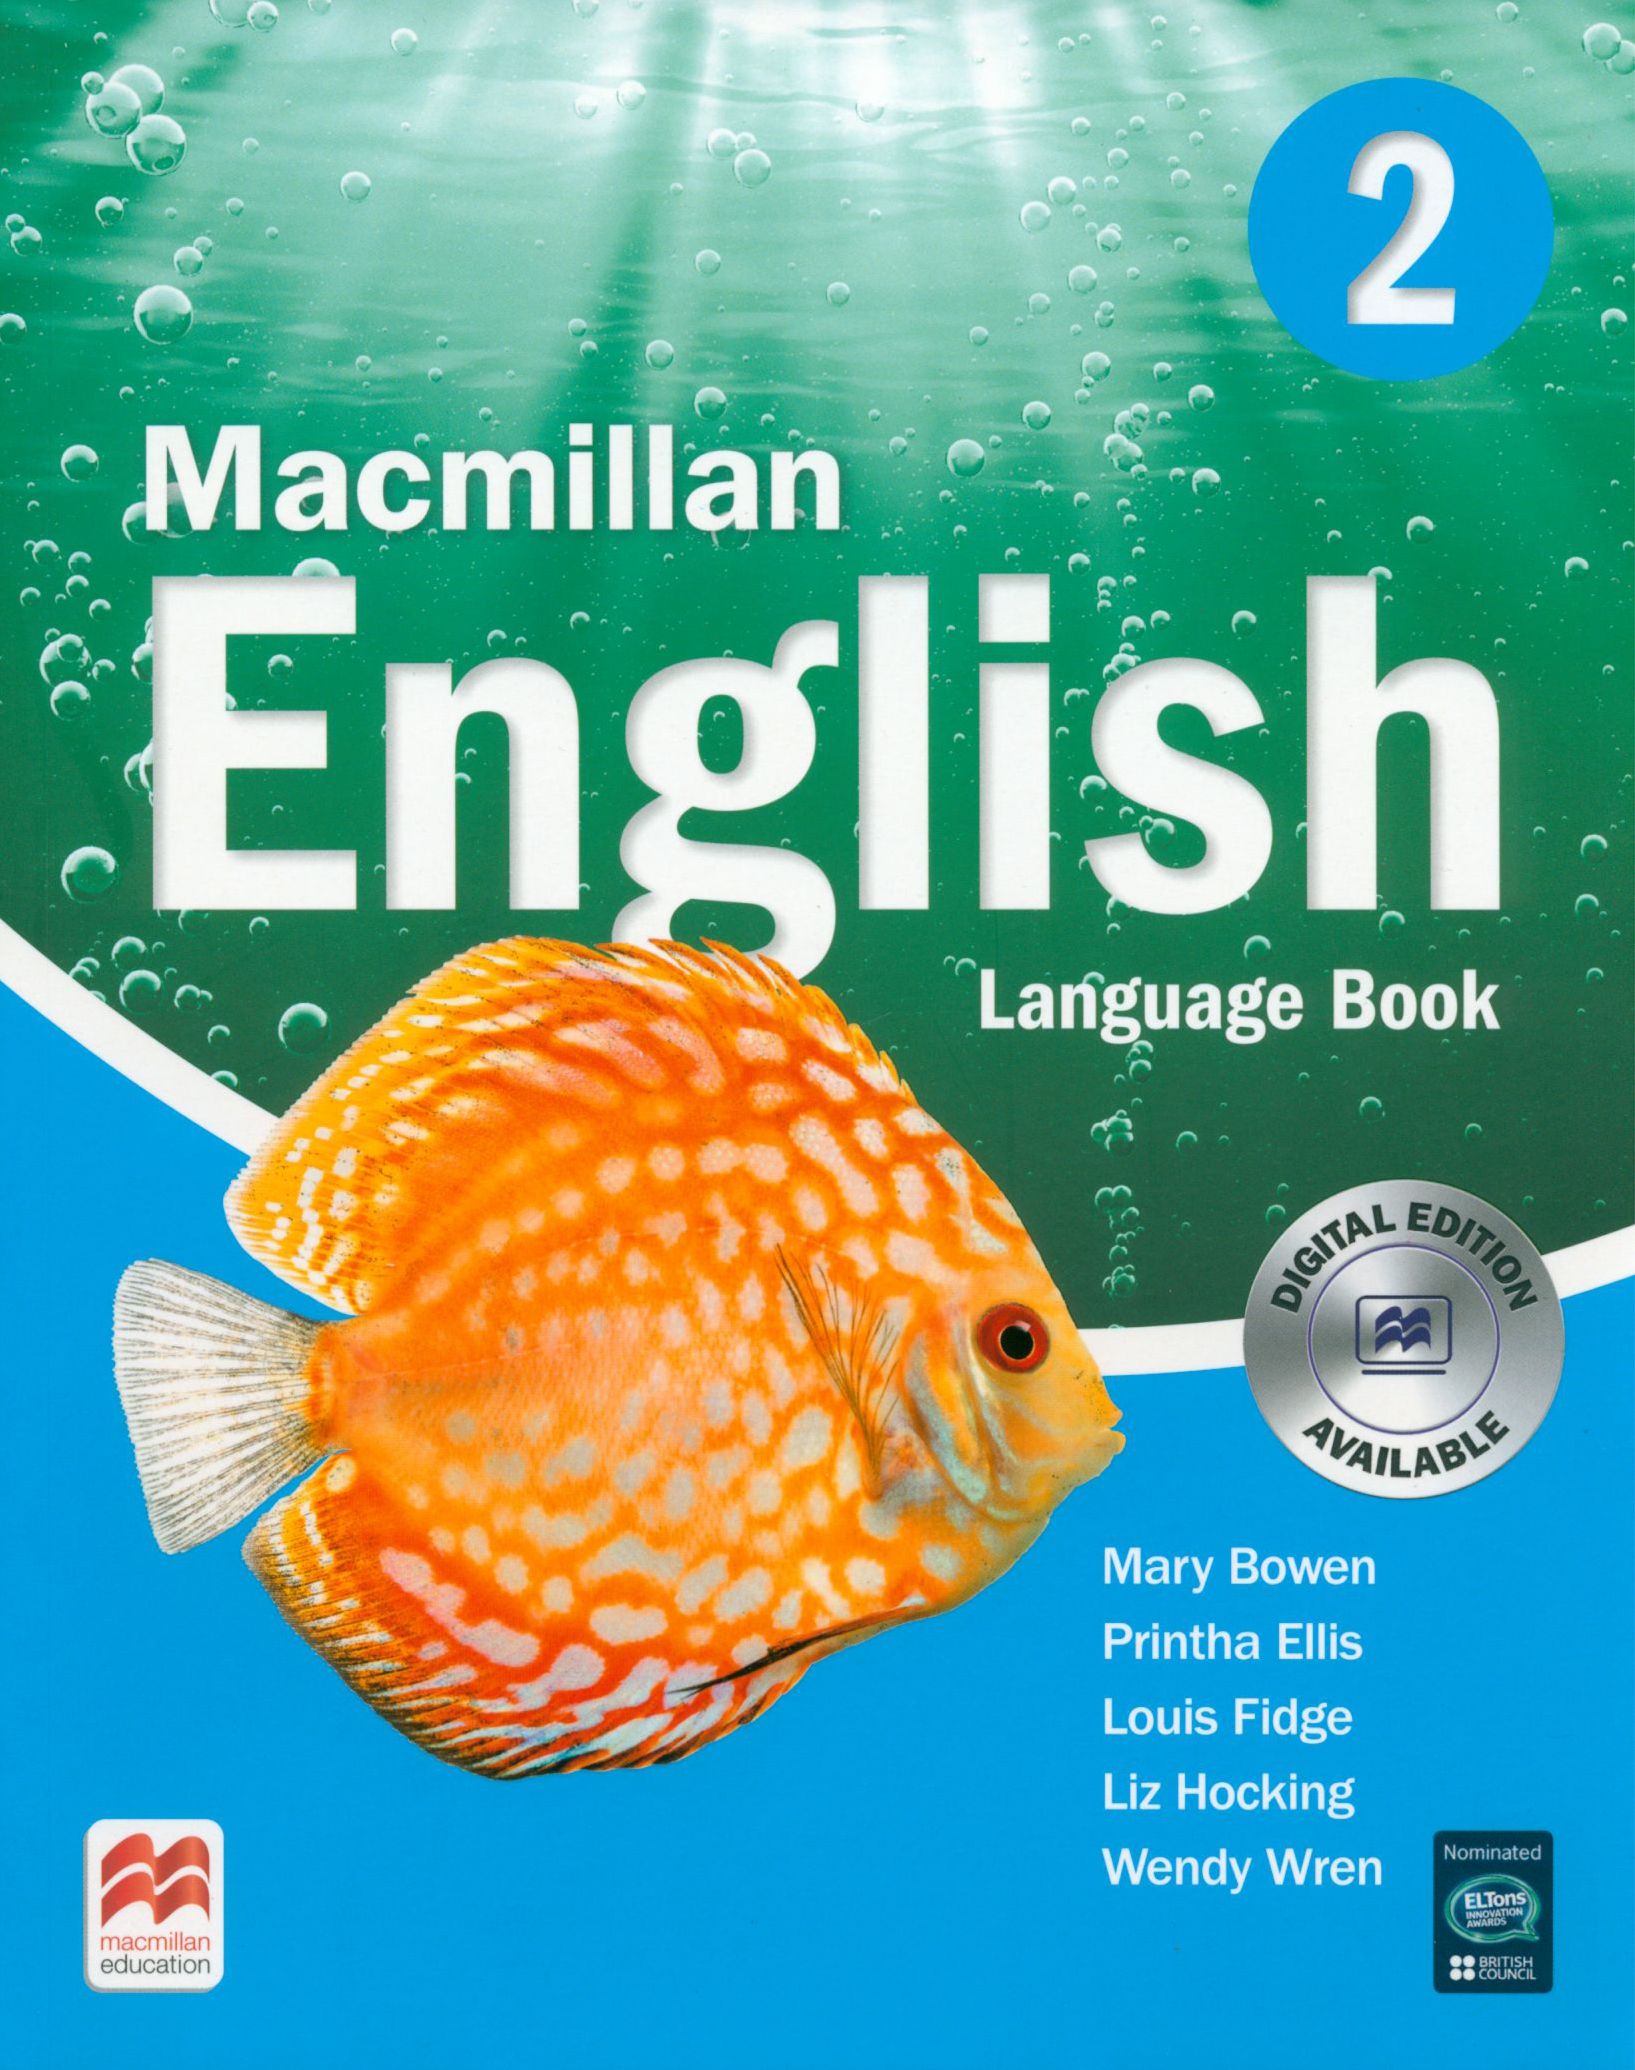 Macmillan English language book. Macmillan книги. Macmillan English книга. English Macmillan a2. Macmillan s book